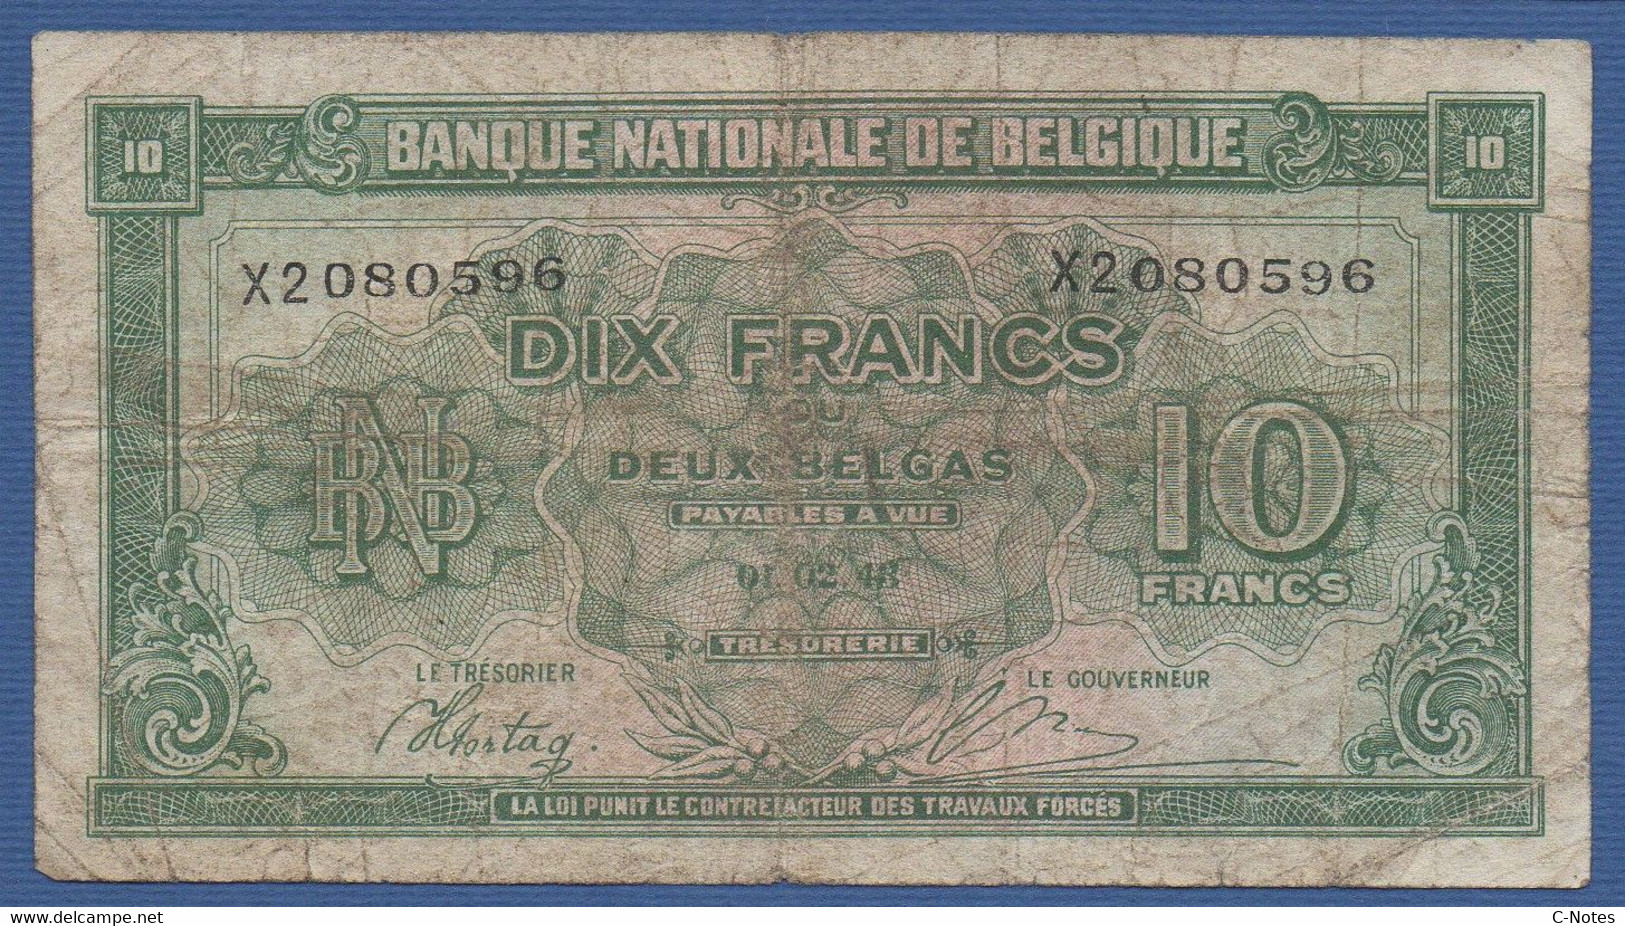 BELGIUM - P.122 – 10 Francs / Frank  = 2 Belgas 1943 CIRCULATED, Serie X2 080596 - 10 Franchi-2 Belgas